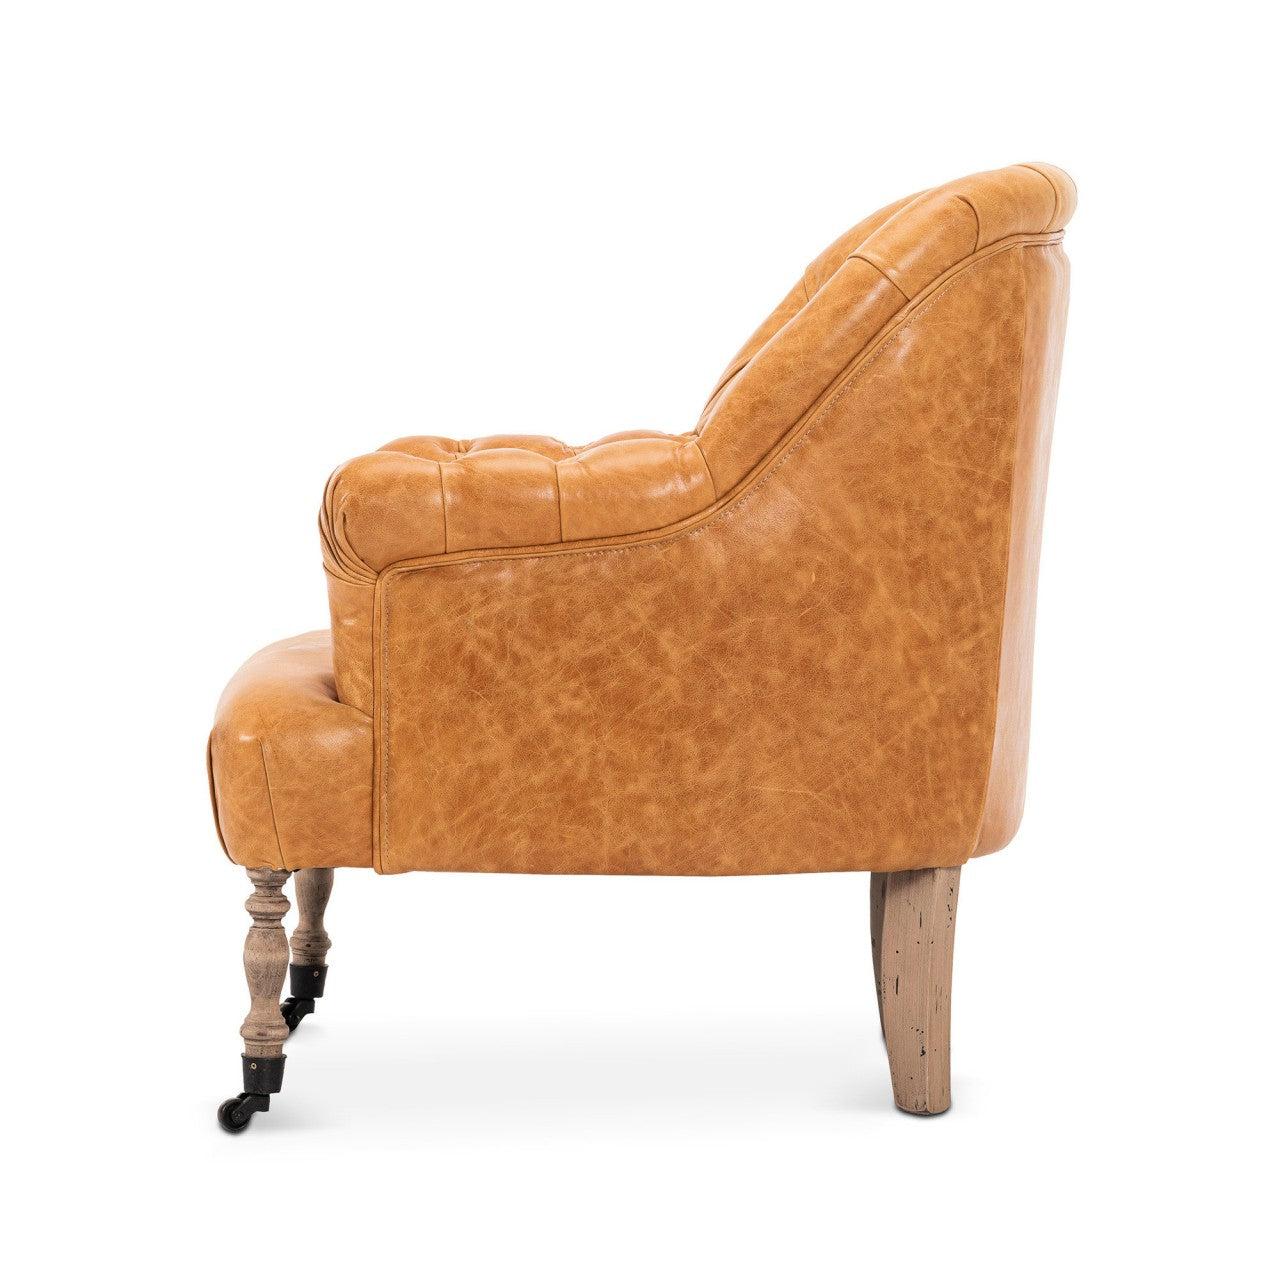 ST. GERMAINE Chair - CAMBRIDGE CHESTNUT leather_Furniture_Mindthegap